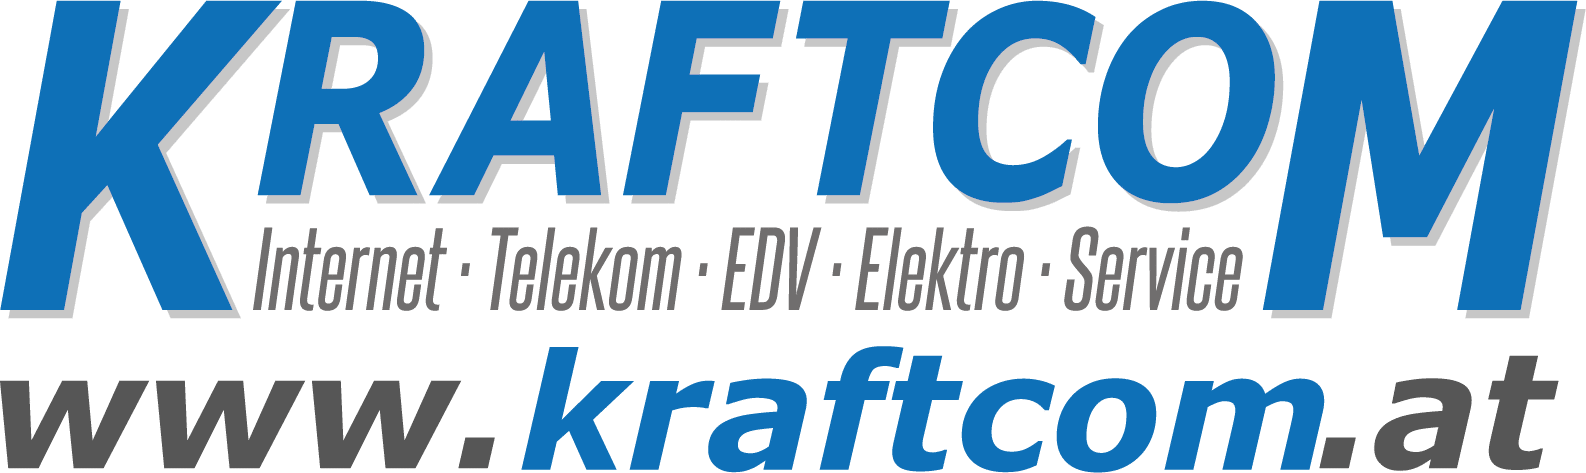 KraftCom Service GmbH